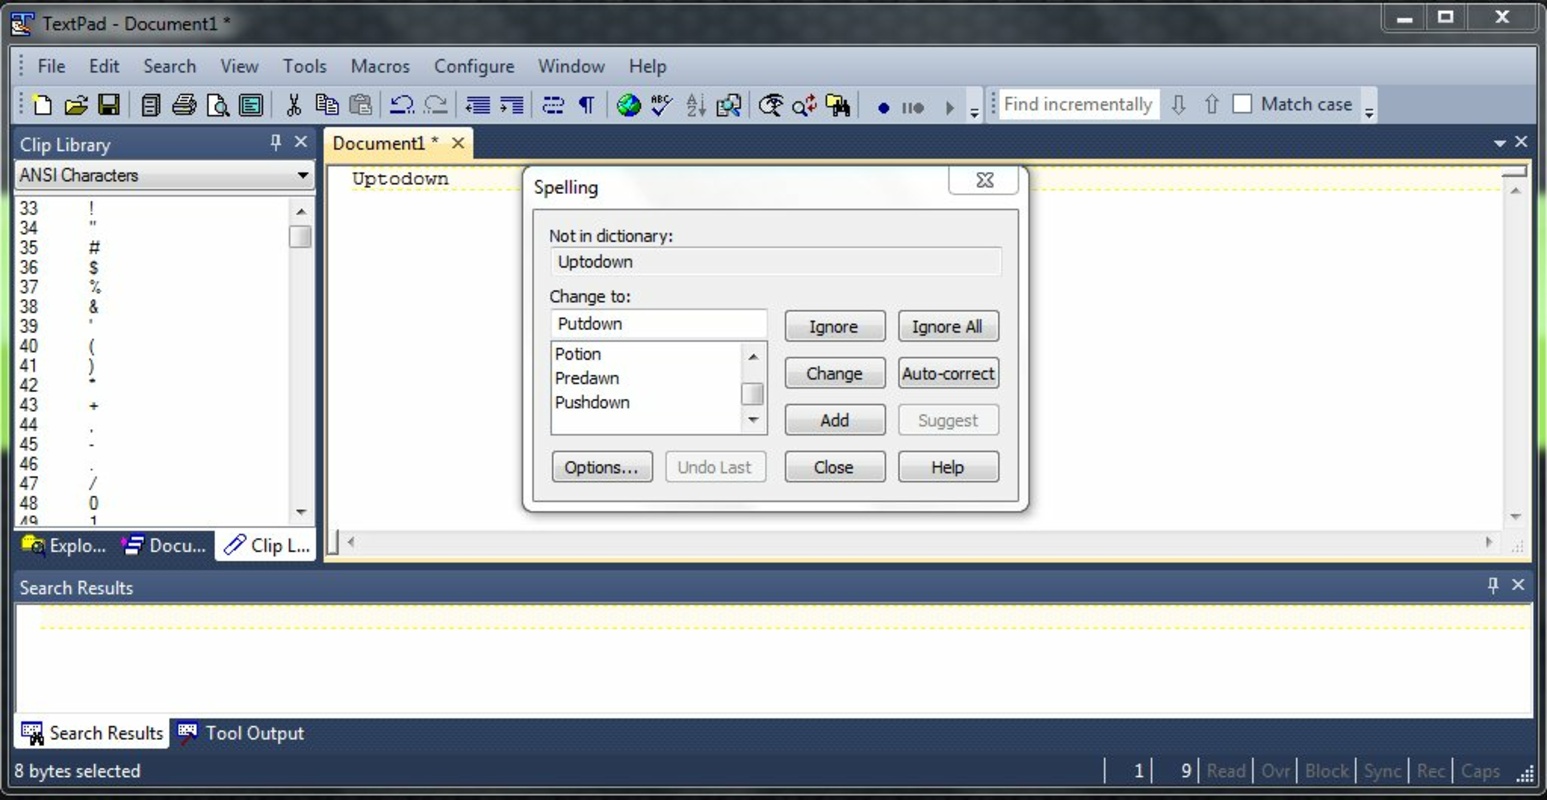 TextPad 8.15.0 for Windows Screenshot 5